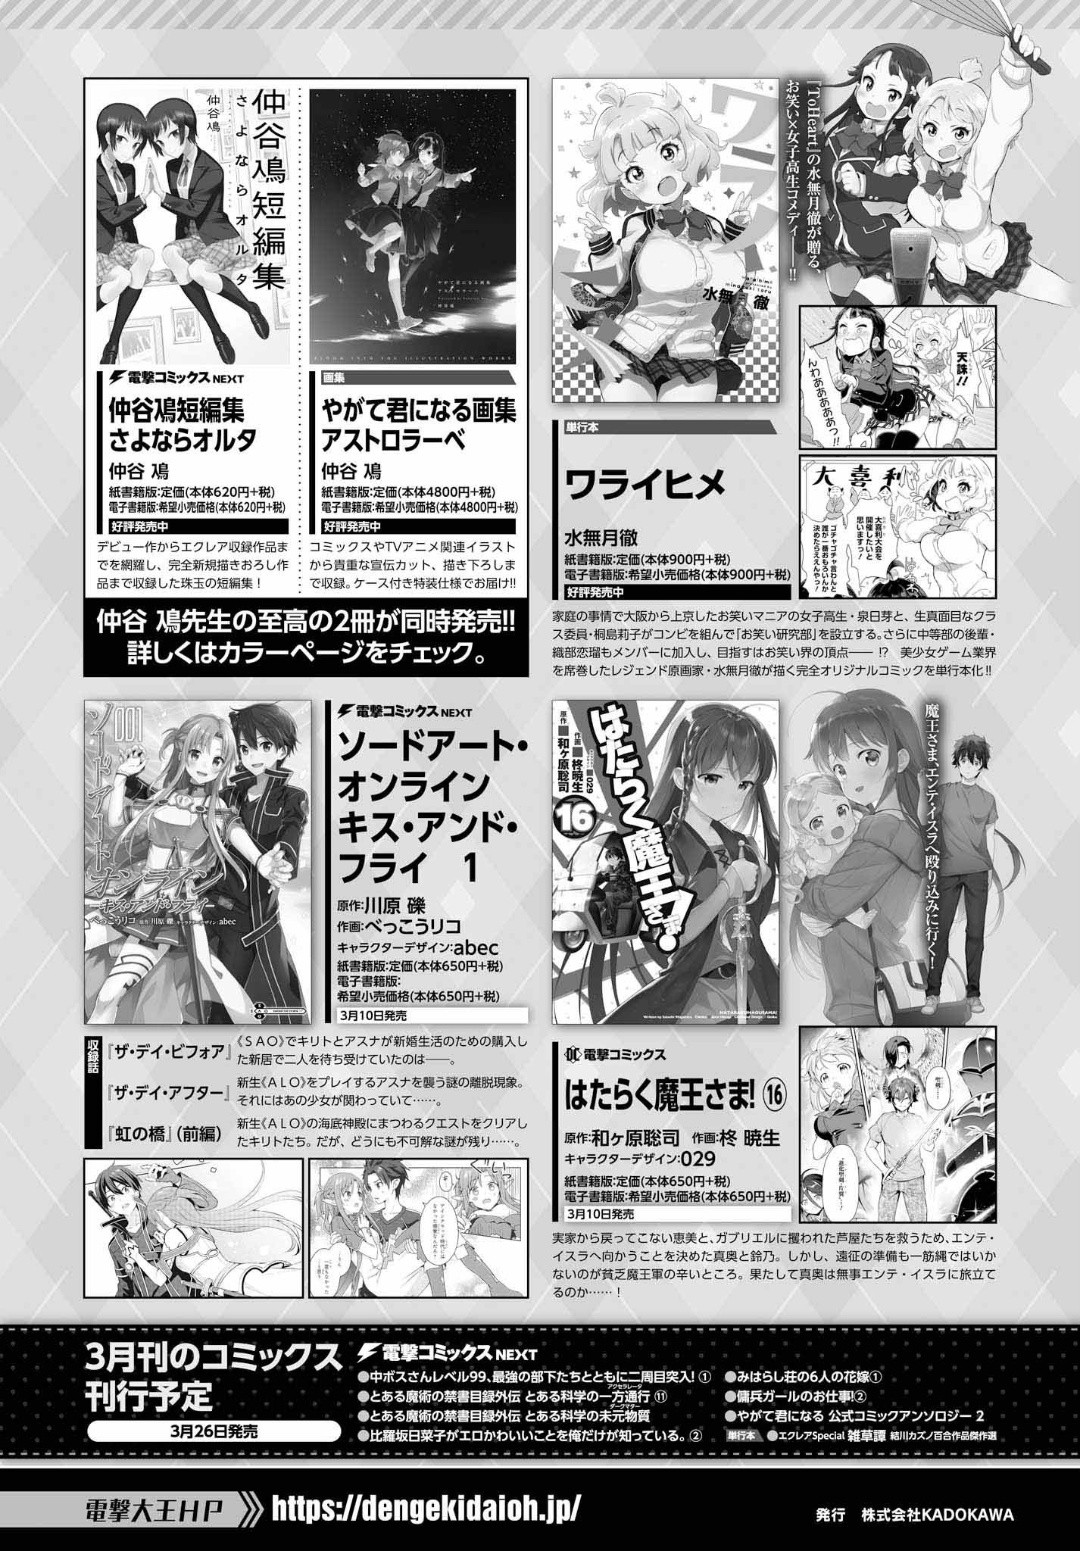 Dengeki Daioh - Chapter 2020-04 - Page 1114